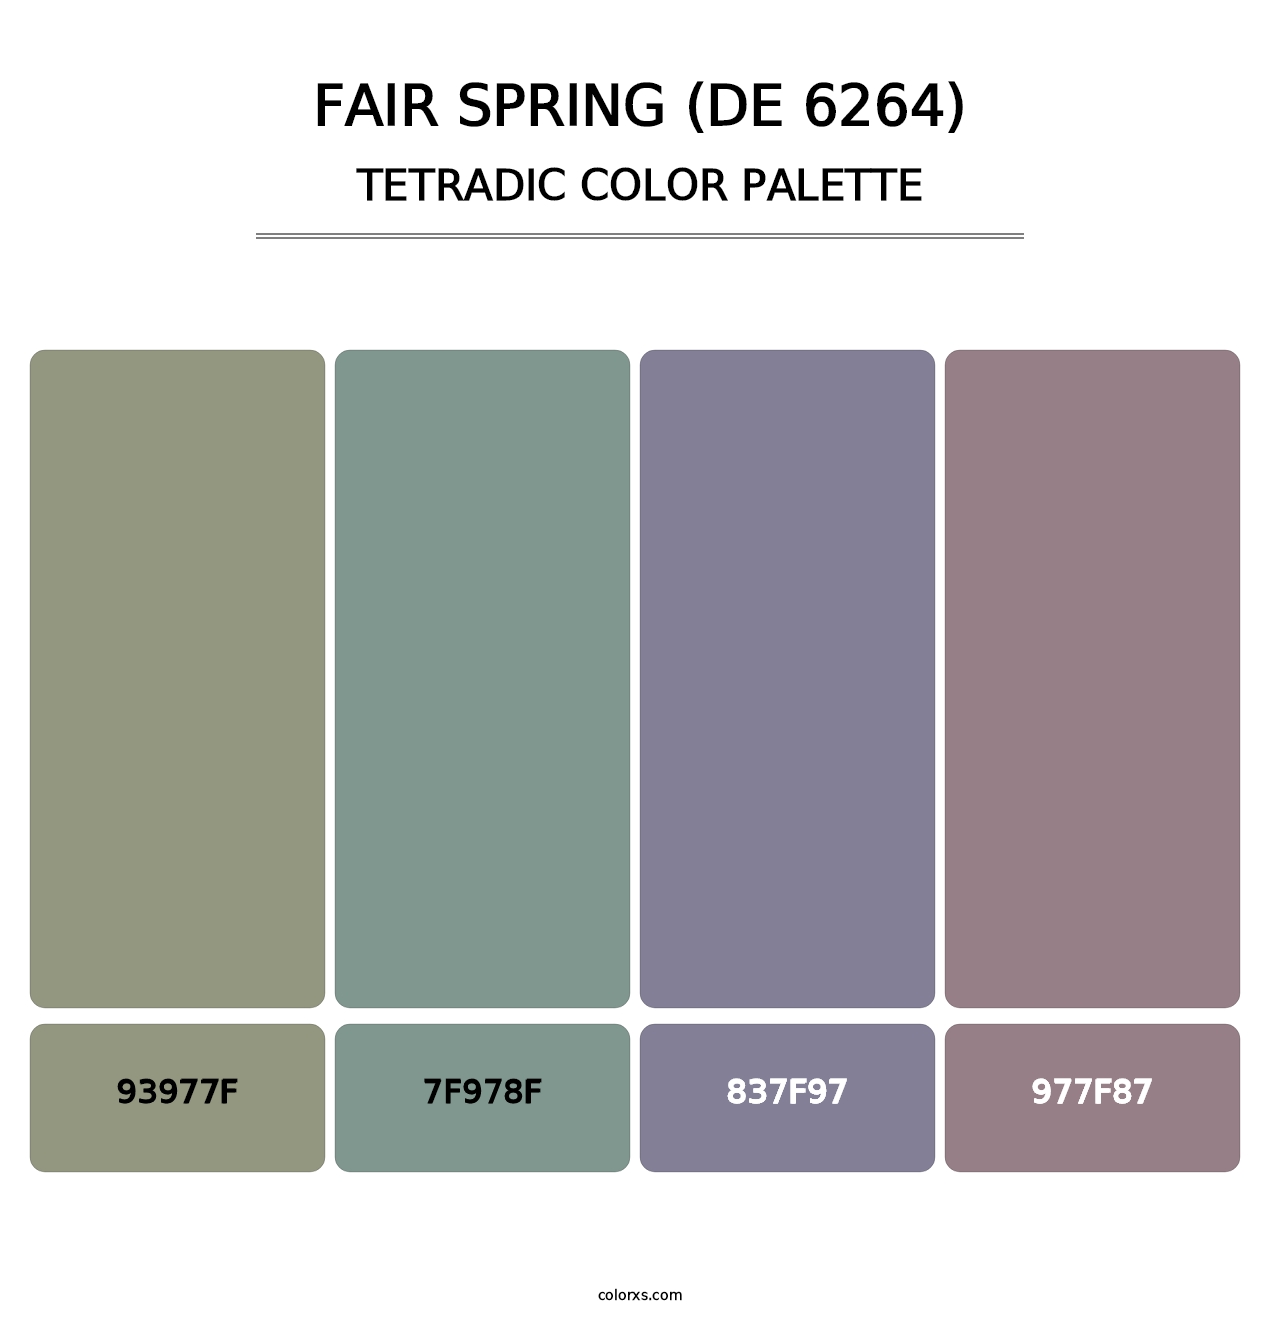 Fair Spring (DE 6264) - Tetradic Color Palette